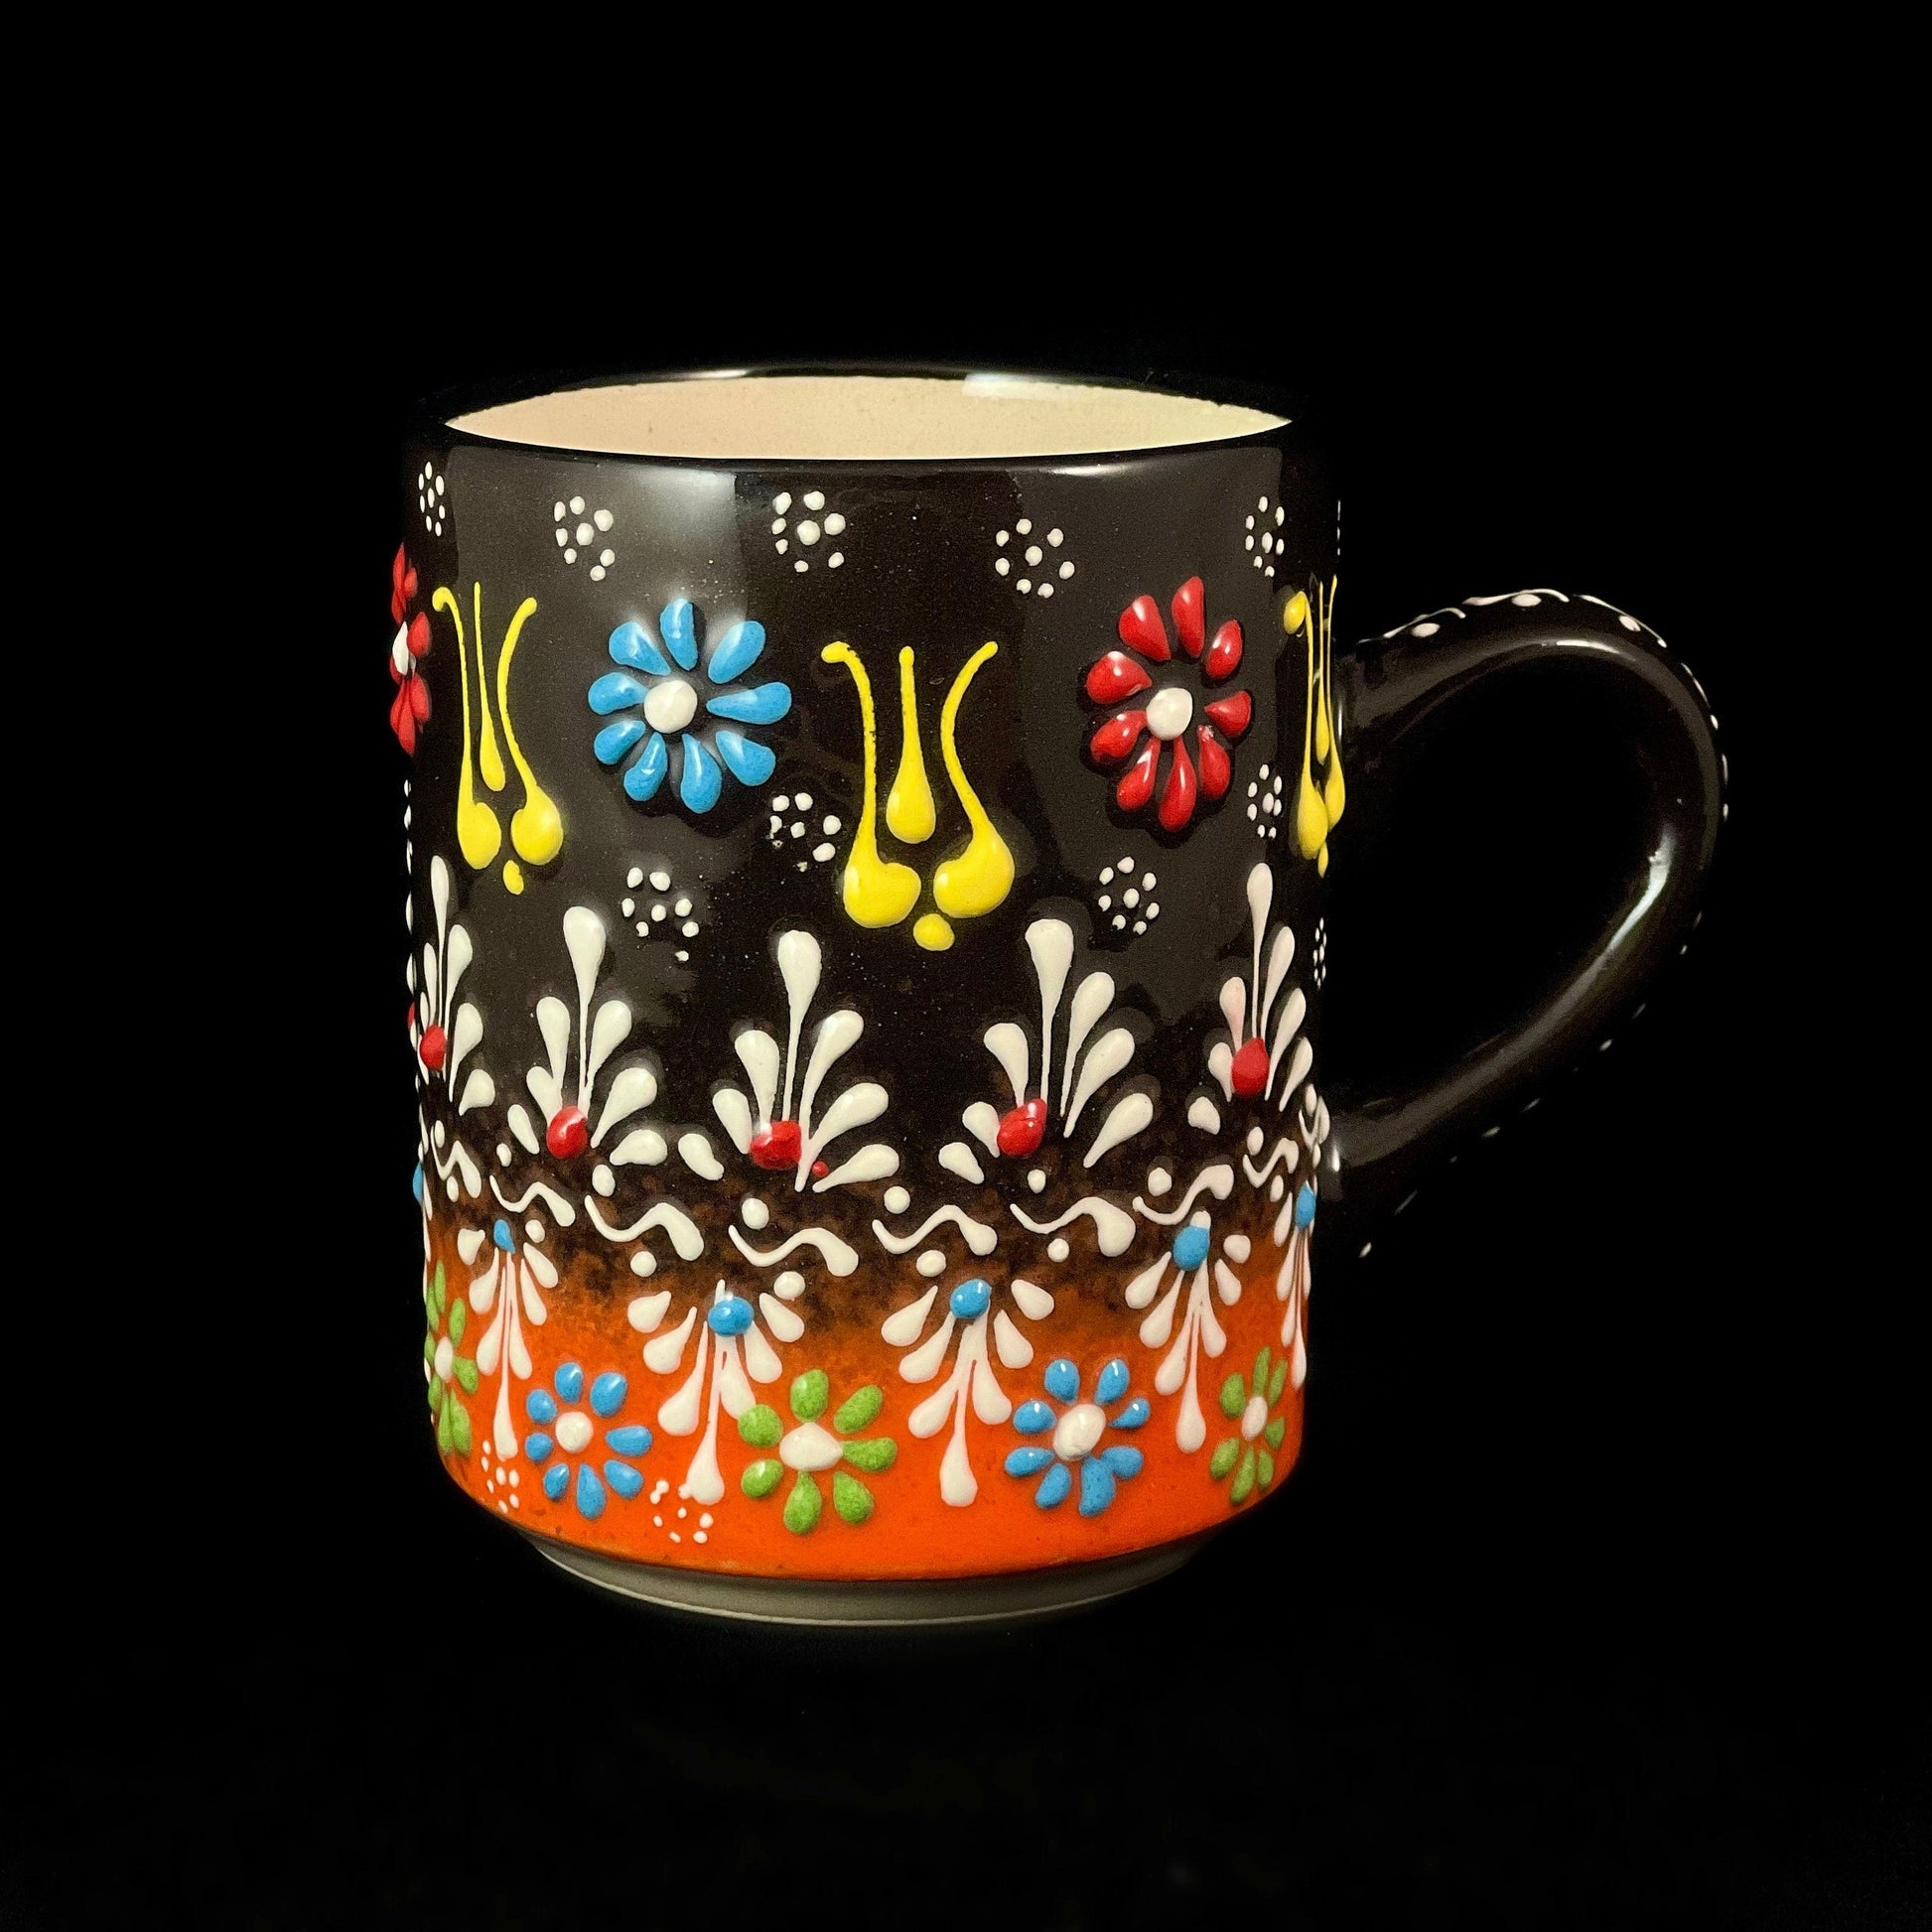 Handmade Mug, Functional and Decorative Turkish Pottery, Cottagecore Style, Brown/Orange